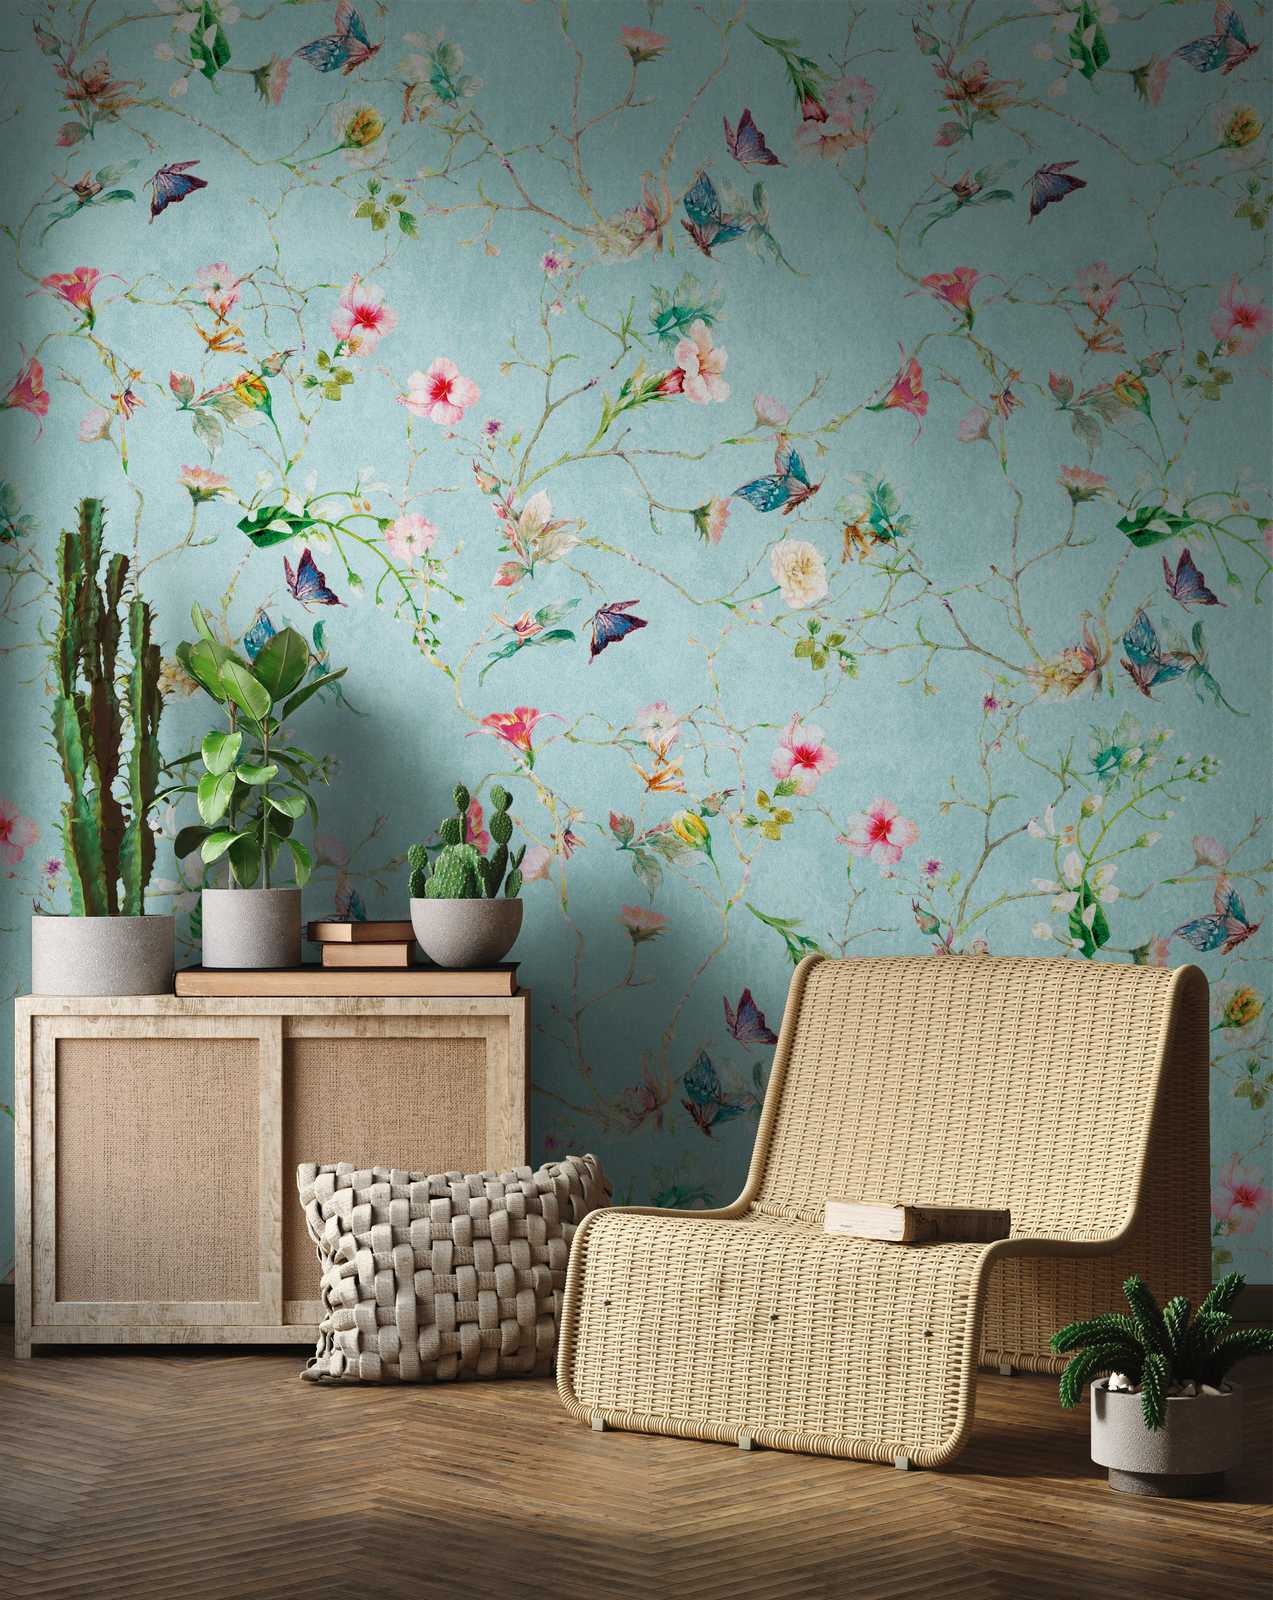             Wallpaper novelty - motif wallpaper butterfly & flowers, turquoise panel motif
        